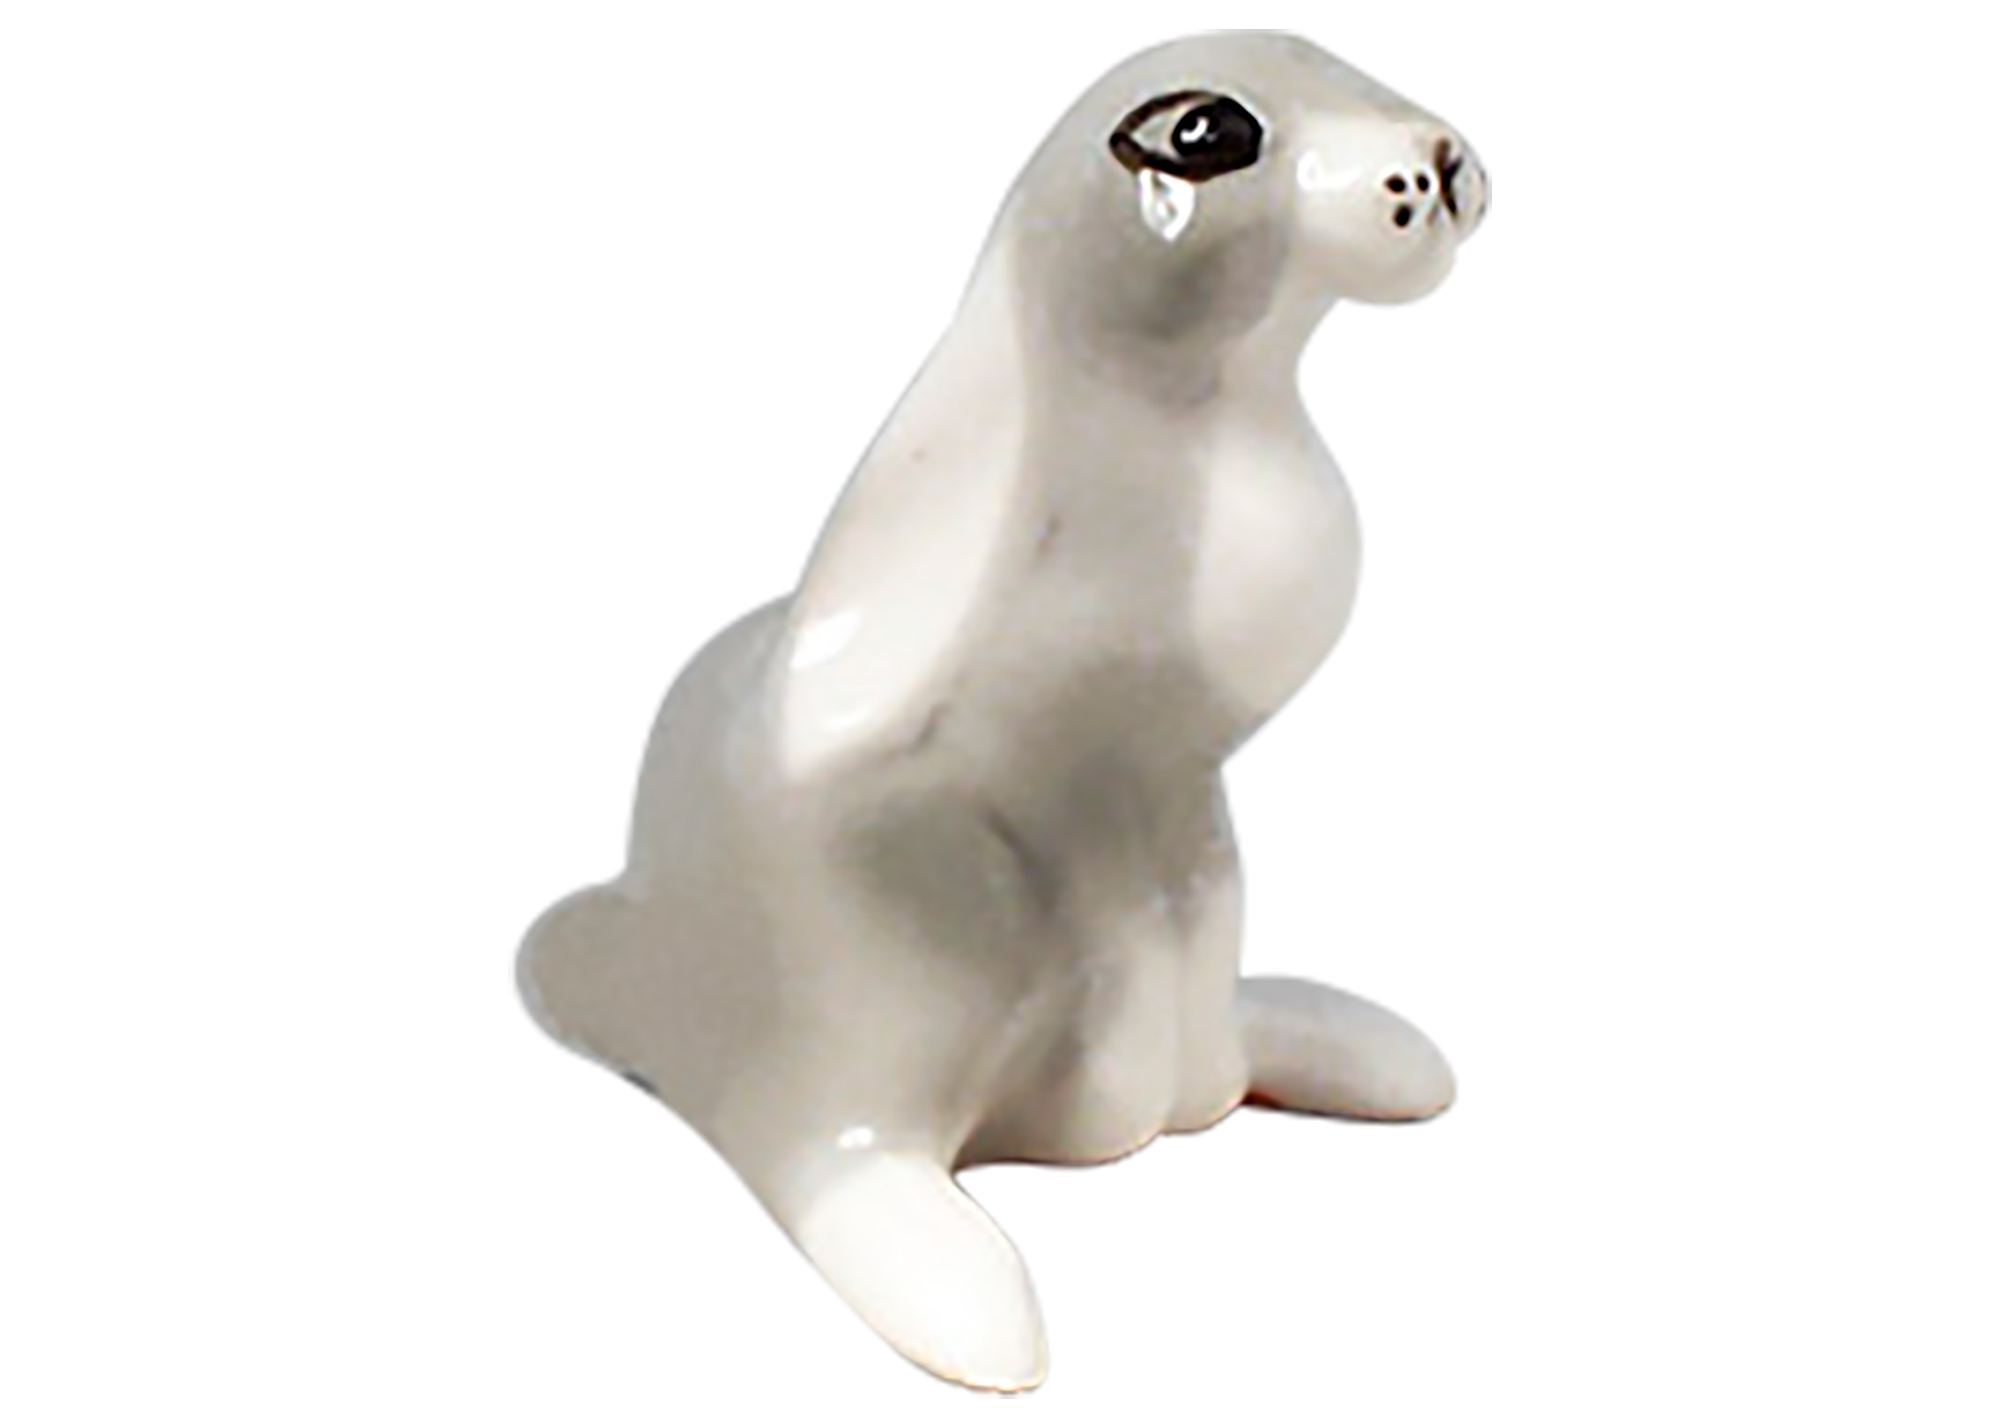 Buy Lop-Eared Bunny Figurine at GoldenCockerel.com